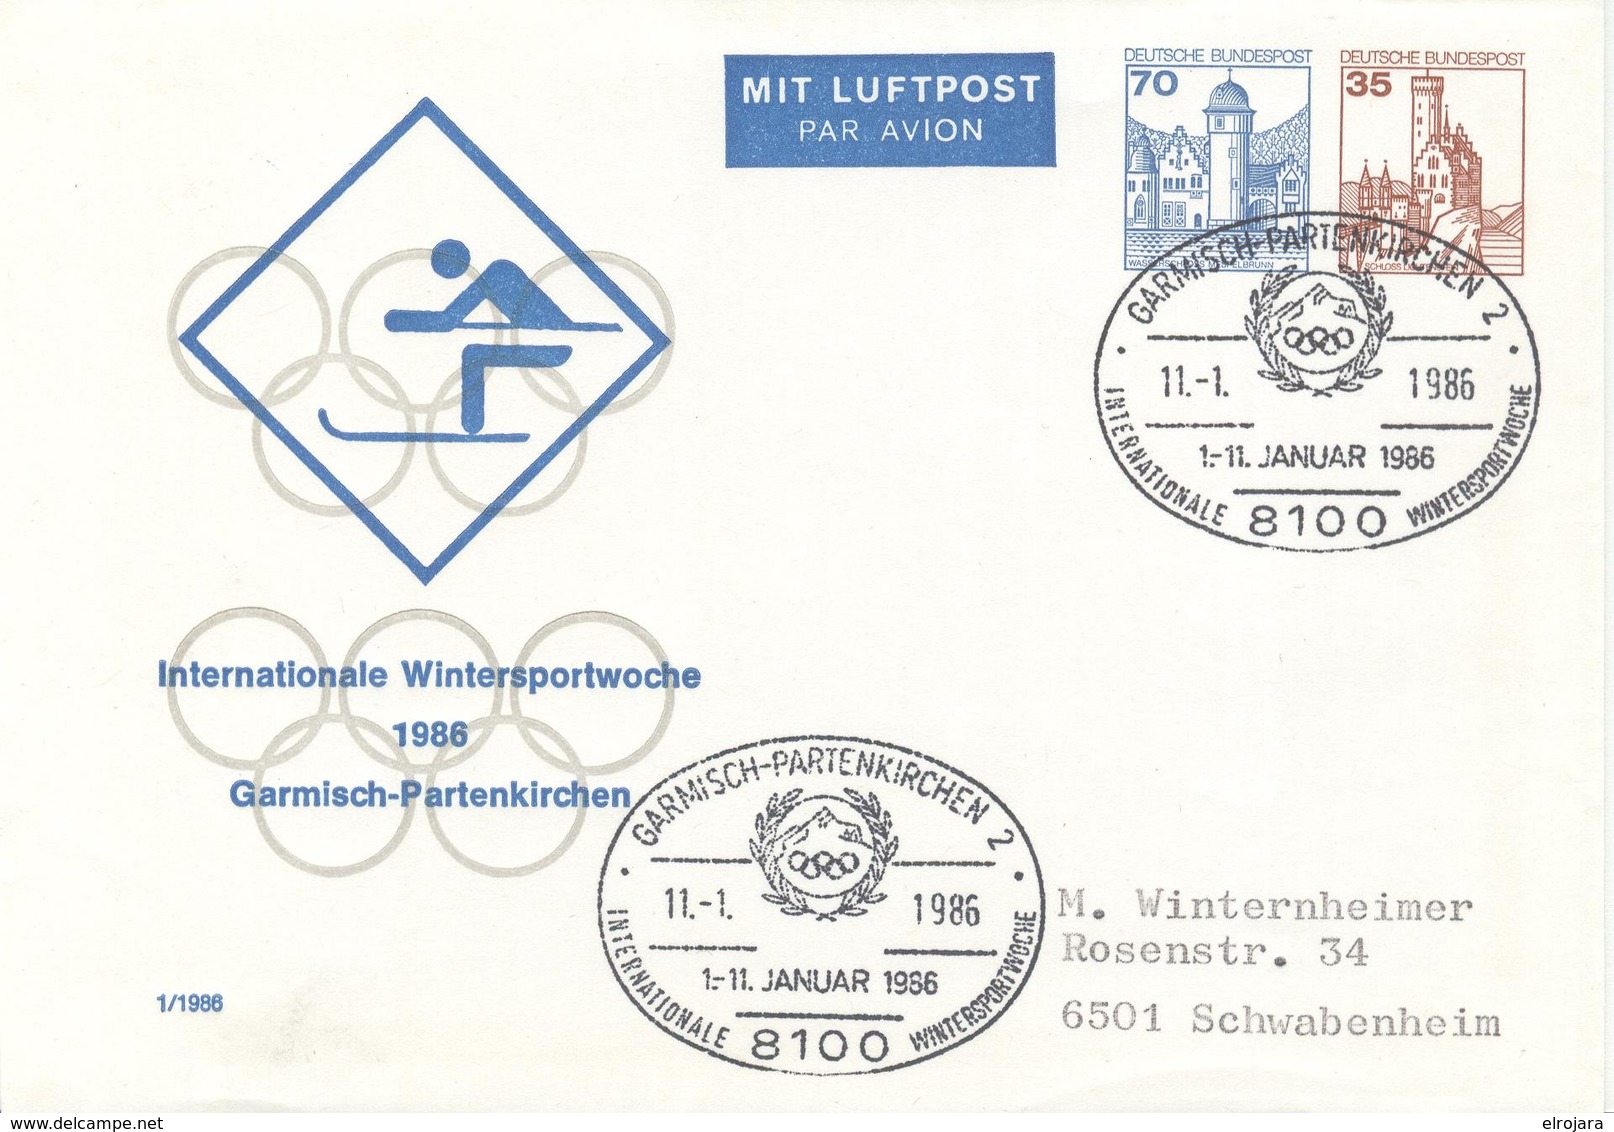 GERMANY Olympic Stationery Cover With Handcancel International Wintersportweek Garmisch-Partenkirchen - Winter 1936: Garmisch-Partenkirchen